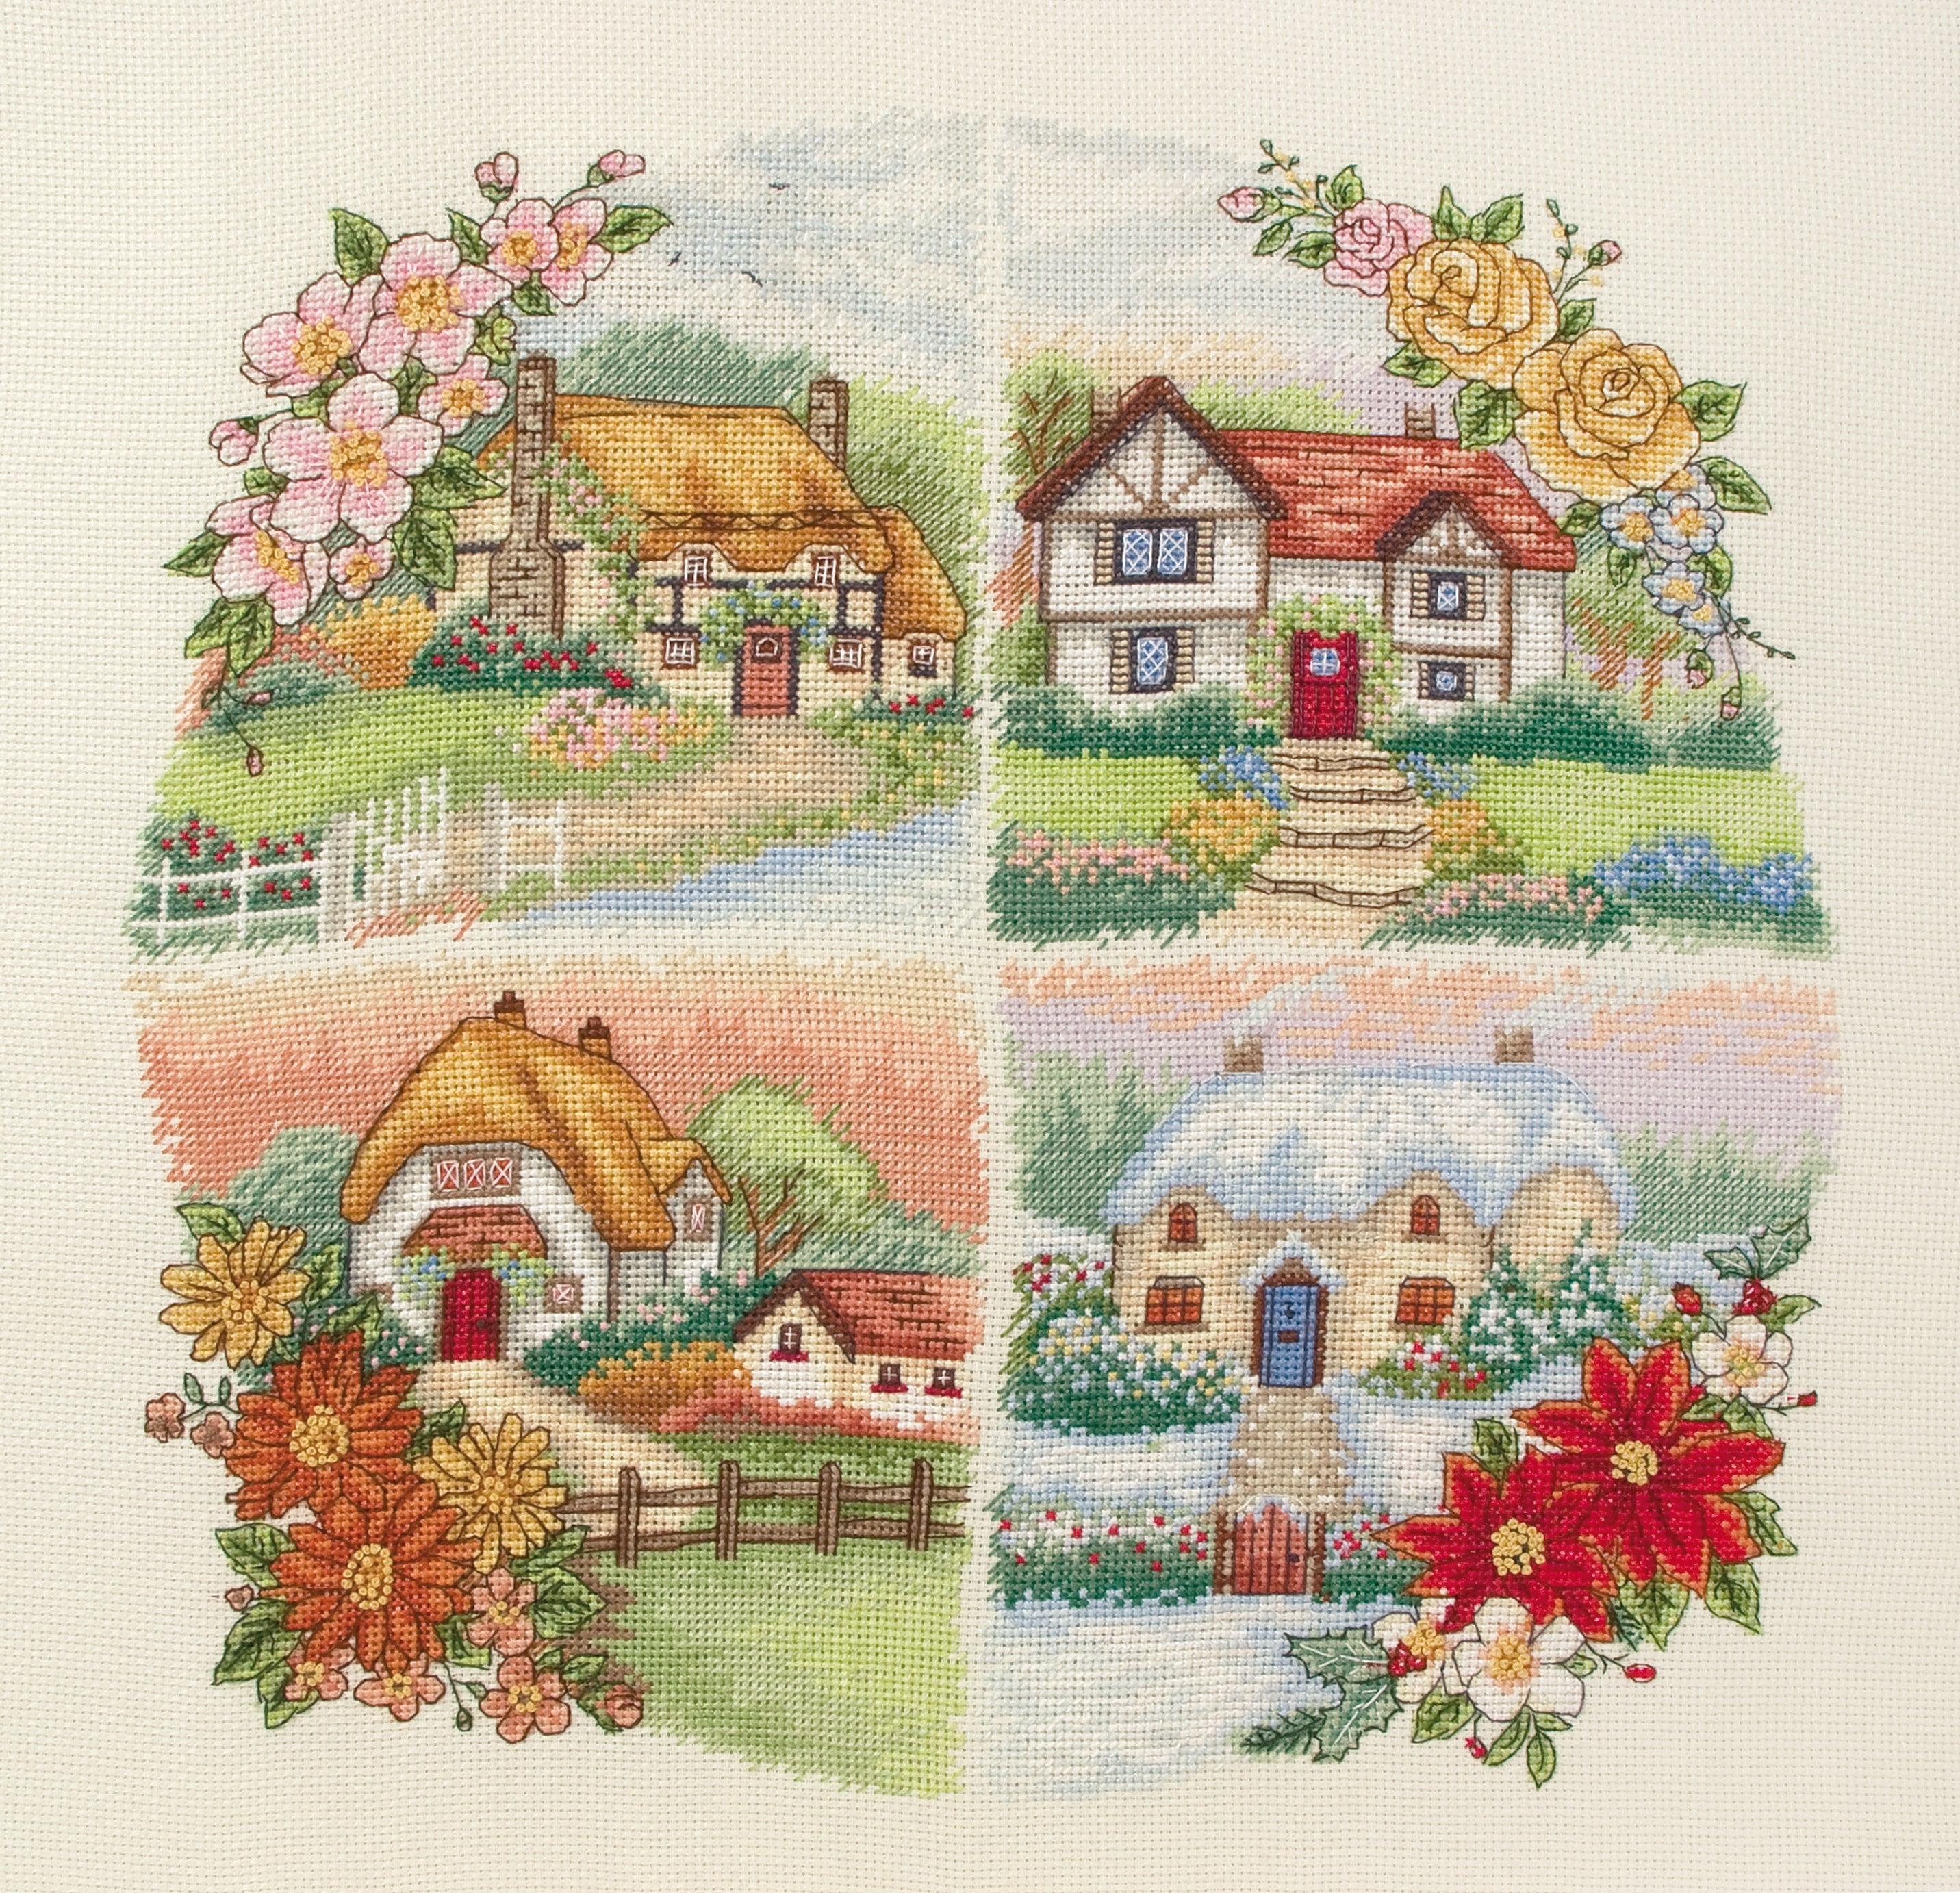 Anchor Cross Stitch Kit - Seasonal Cottages - Luca-S Cross Stitch Kits